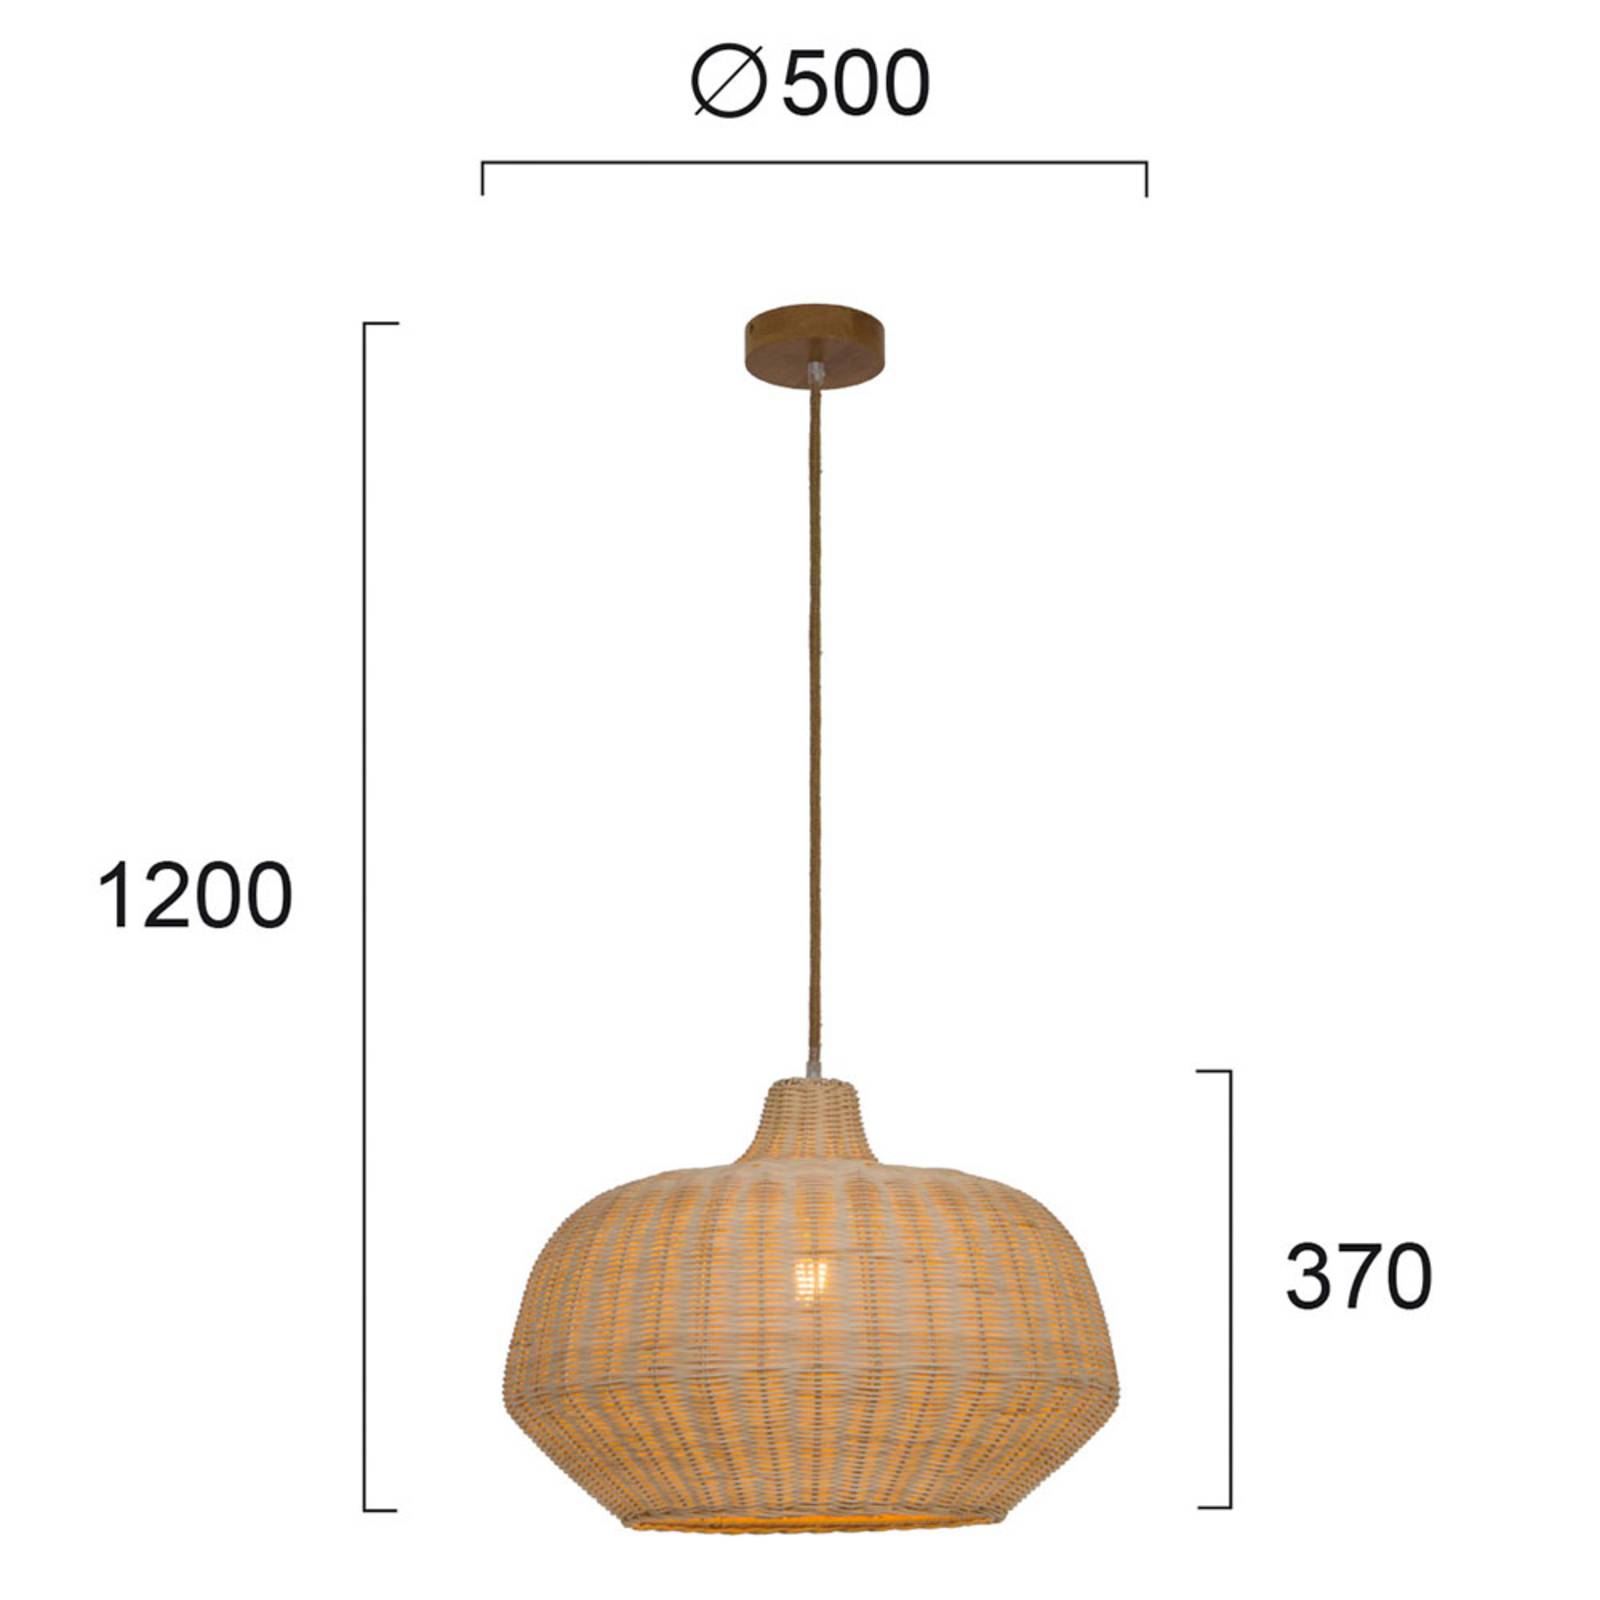 Lampa wisząca Malibu z rattanu, 37 cm, beżowa